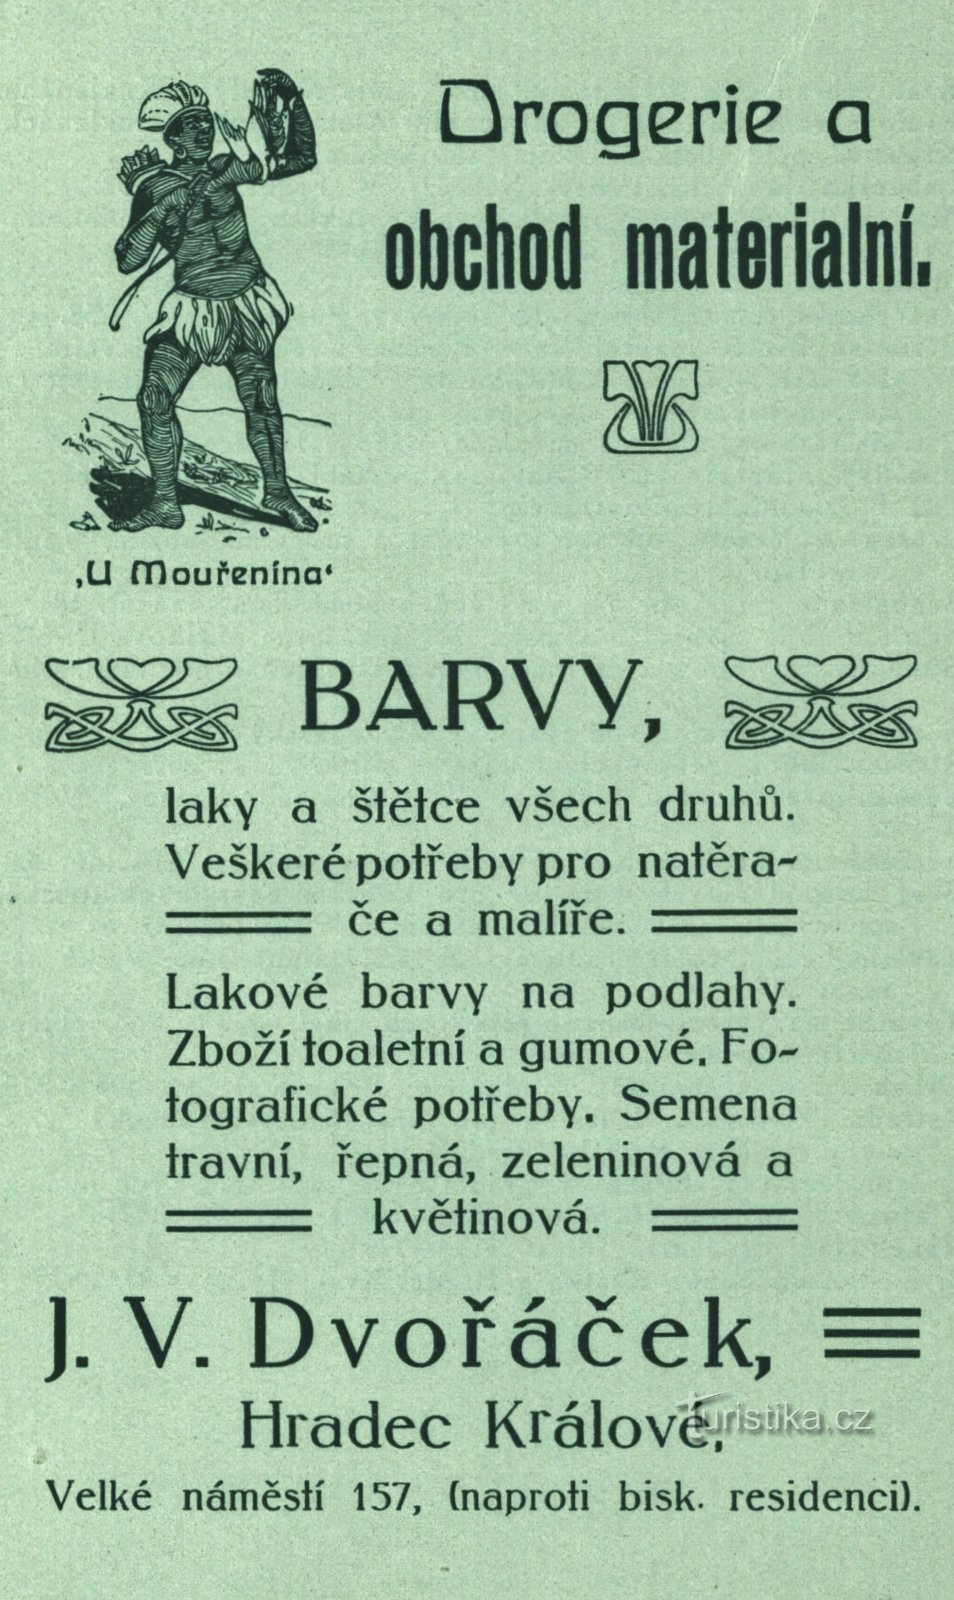 Periodična reklama Dvořáčekove drogerije iz 1896